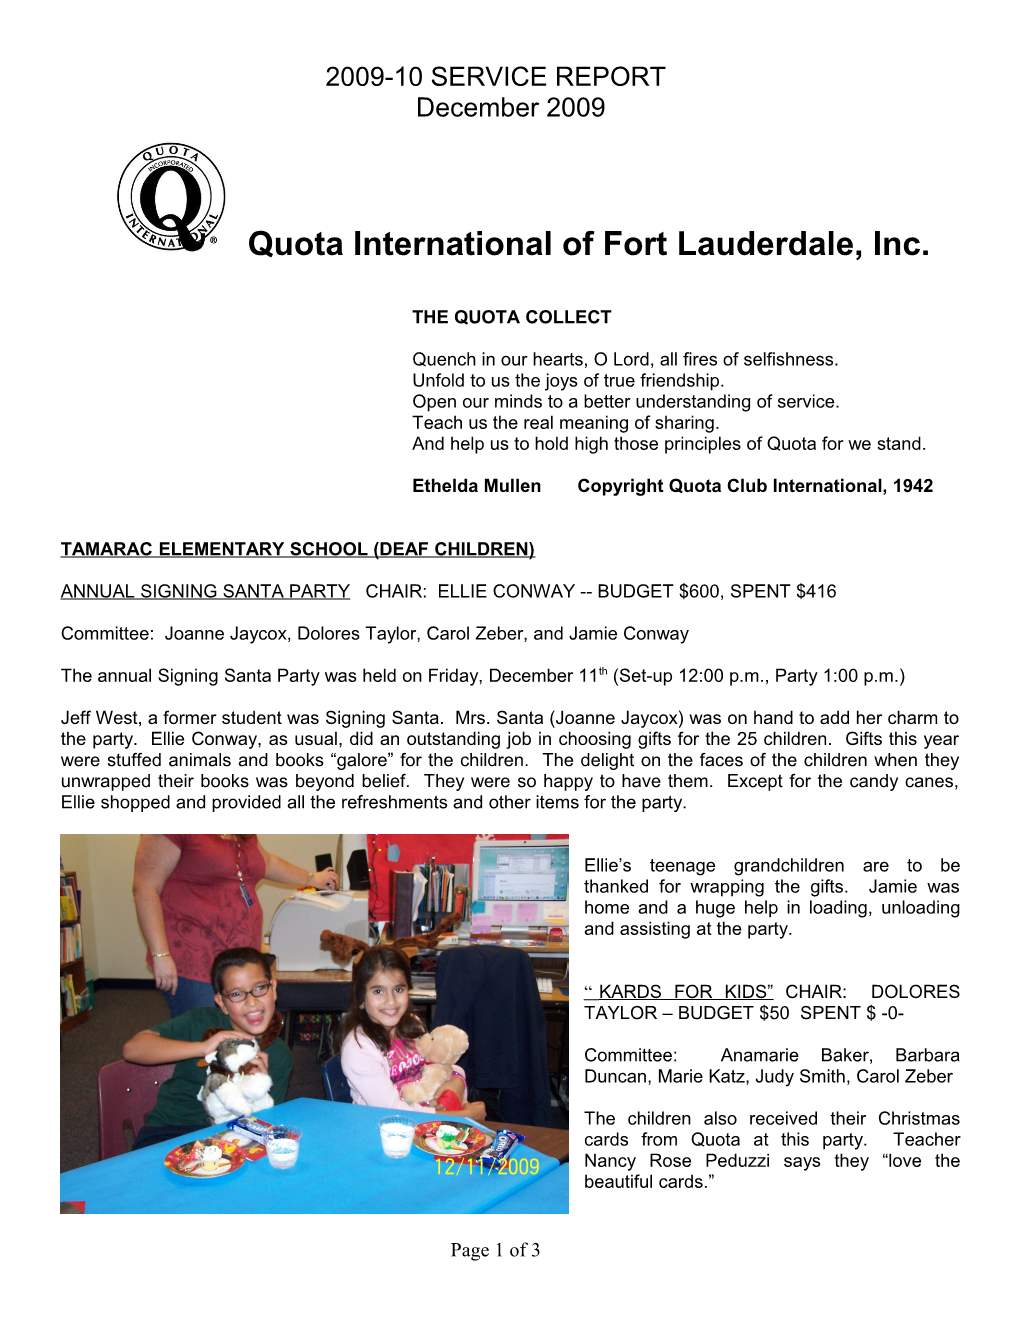 Quota International of Fort Lauderdale, Inc